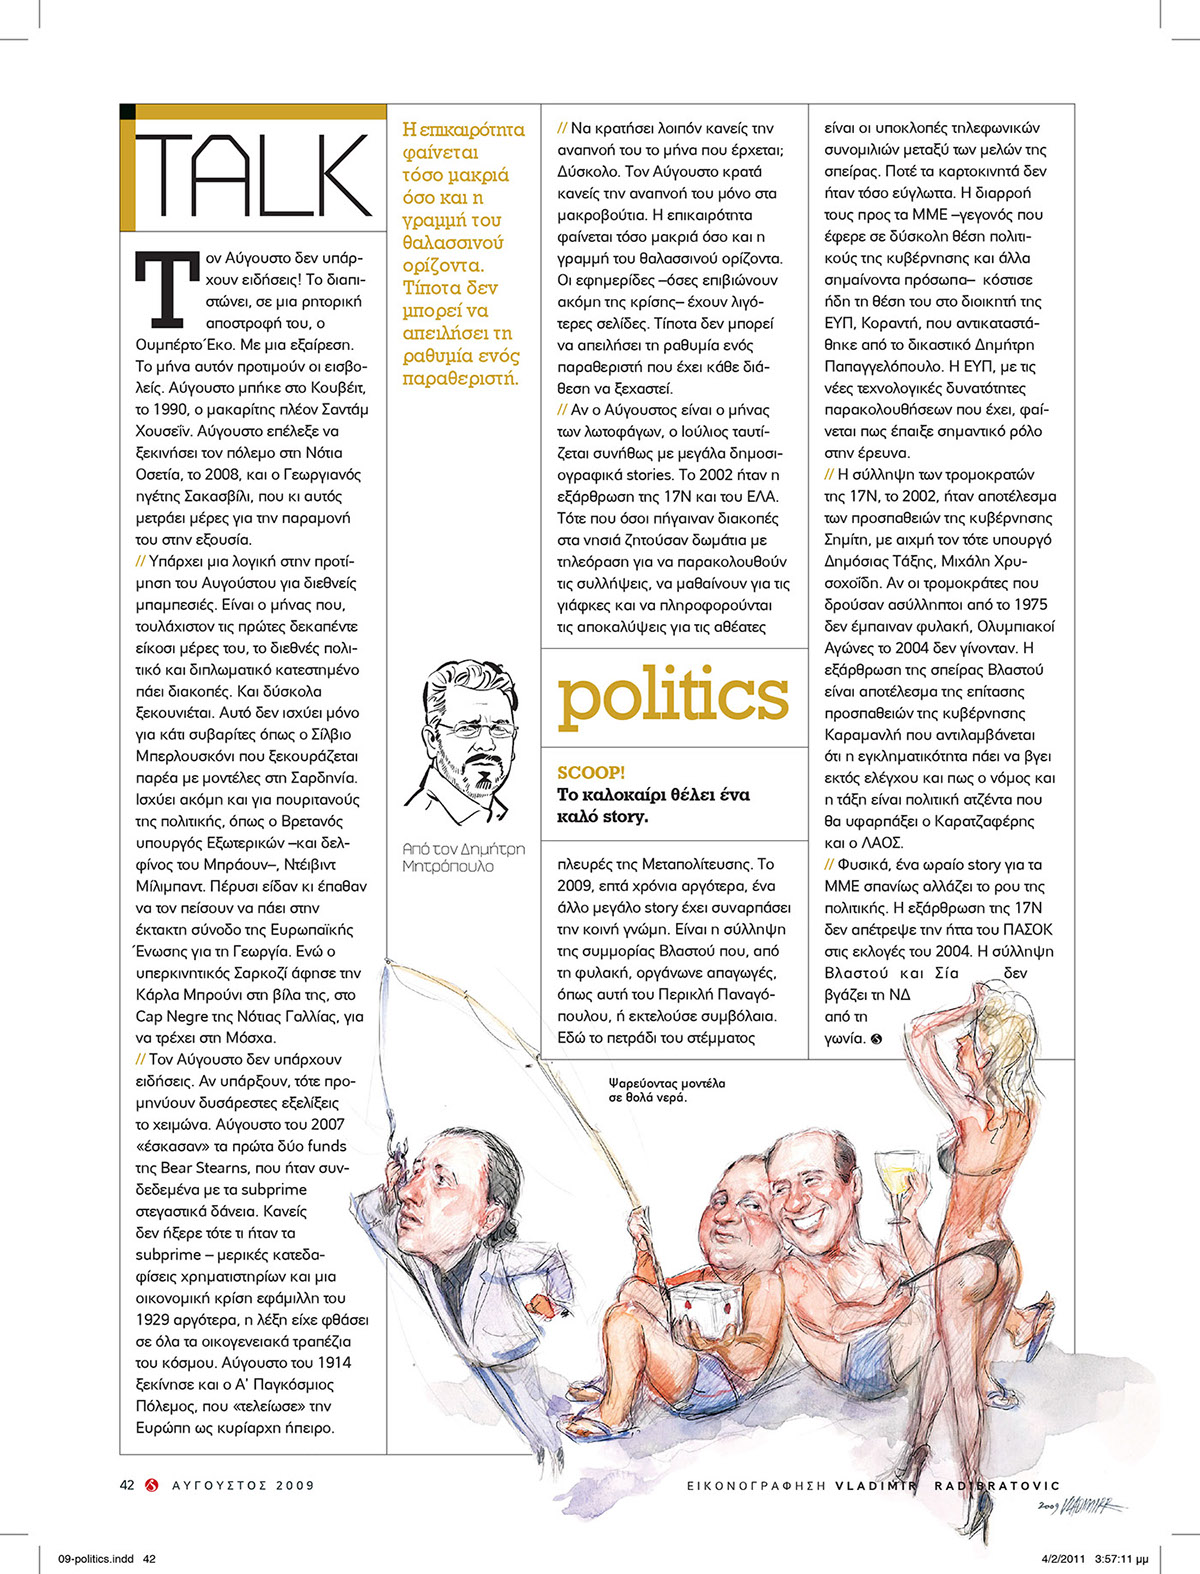 editorial magazine politics Greece watercolor politicians portraits funny caricatures